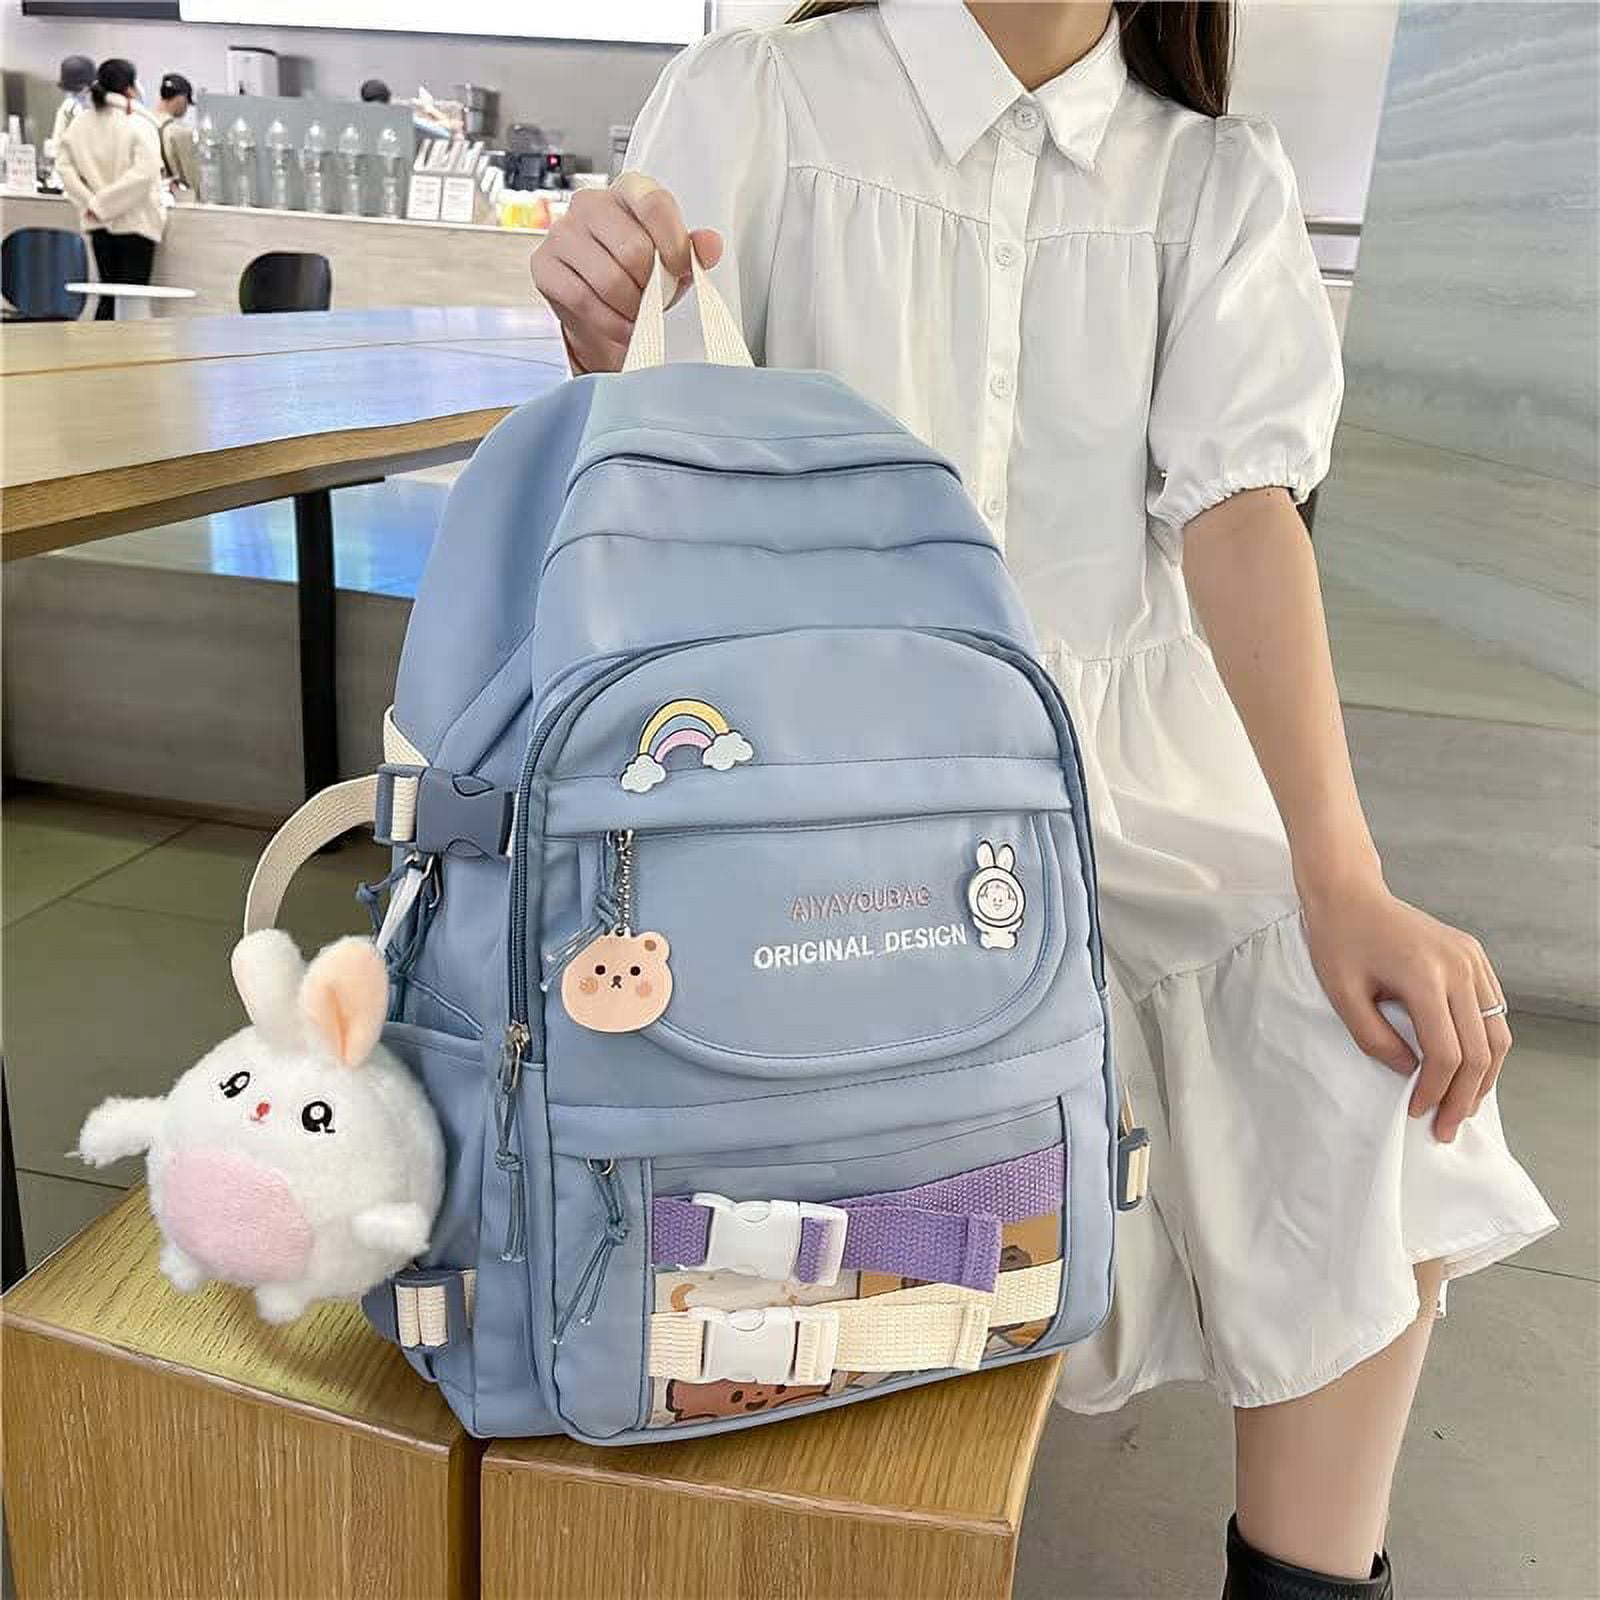 Danceemangoos Kawaii Backpack with Pins Accessories, Aesthetic Pastel Laptop Ita Bag, Cute Japanese Back to School Supplies Stationary (Pink), Adult